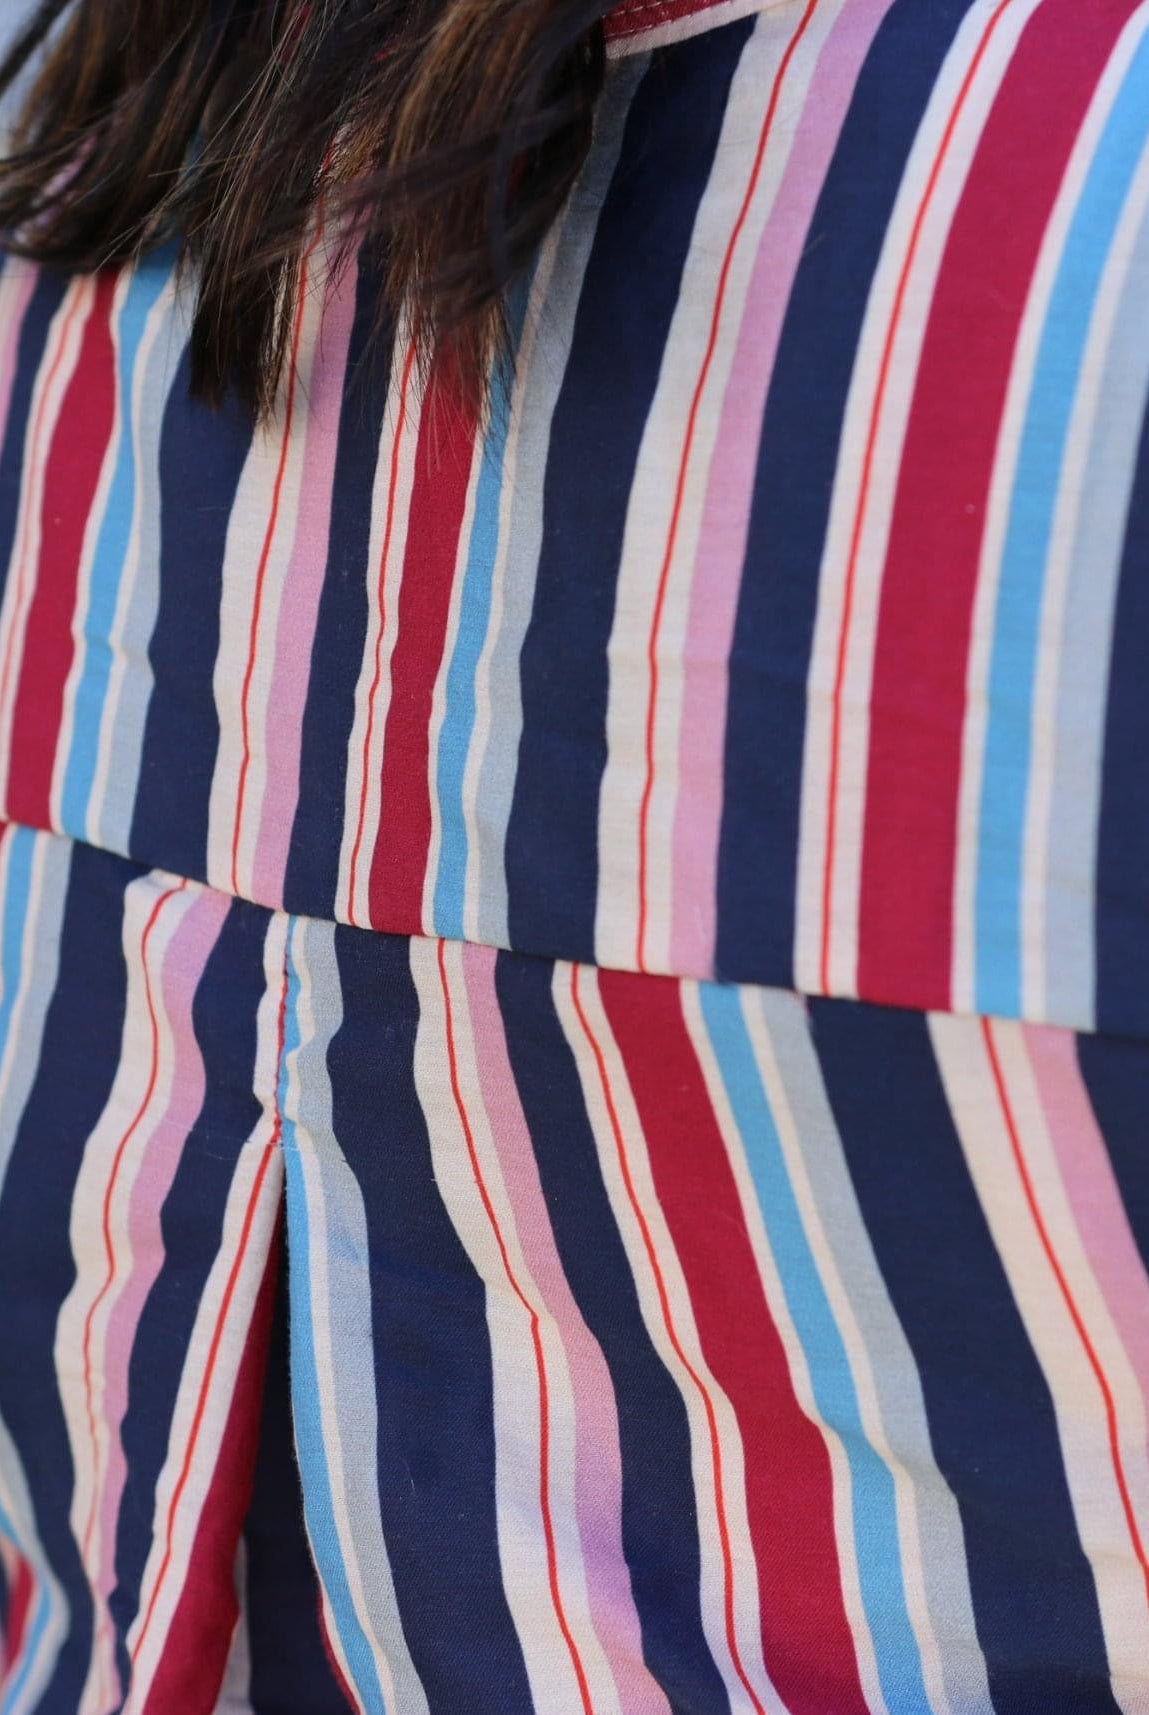 2 Yard-Last Cuts! Berry Stripes, Silk/Cotton Woven, Stripes run Vertical. WVP-252-BRY - Boho Fabrics